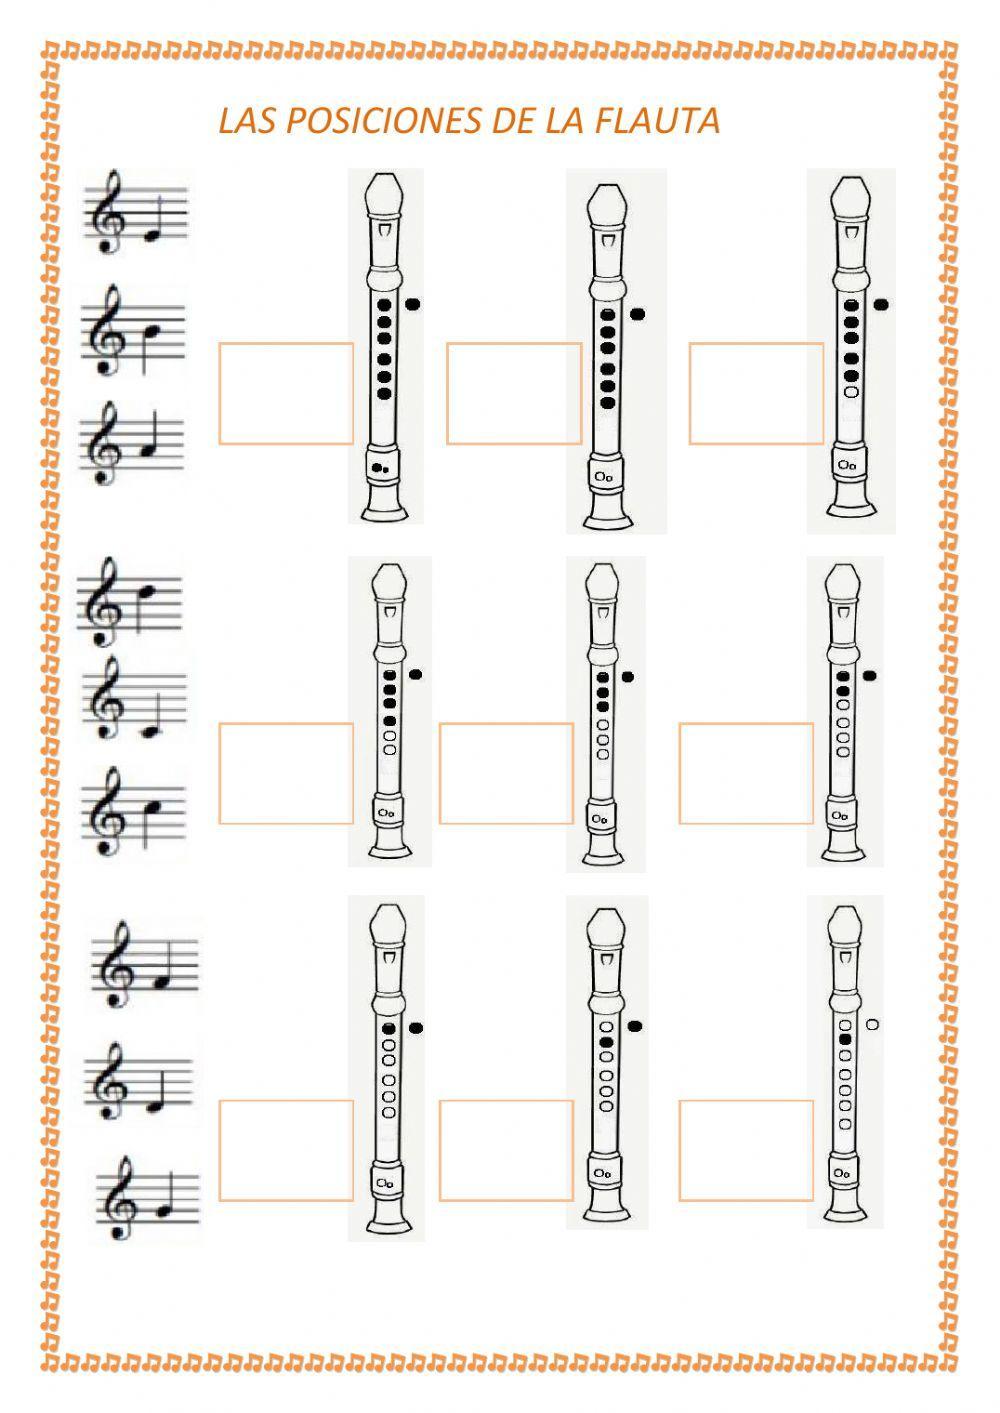 Las posiciones de la flauta